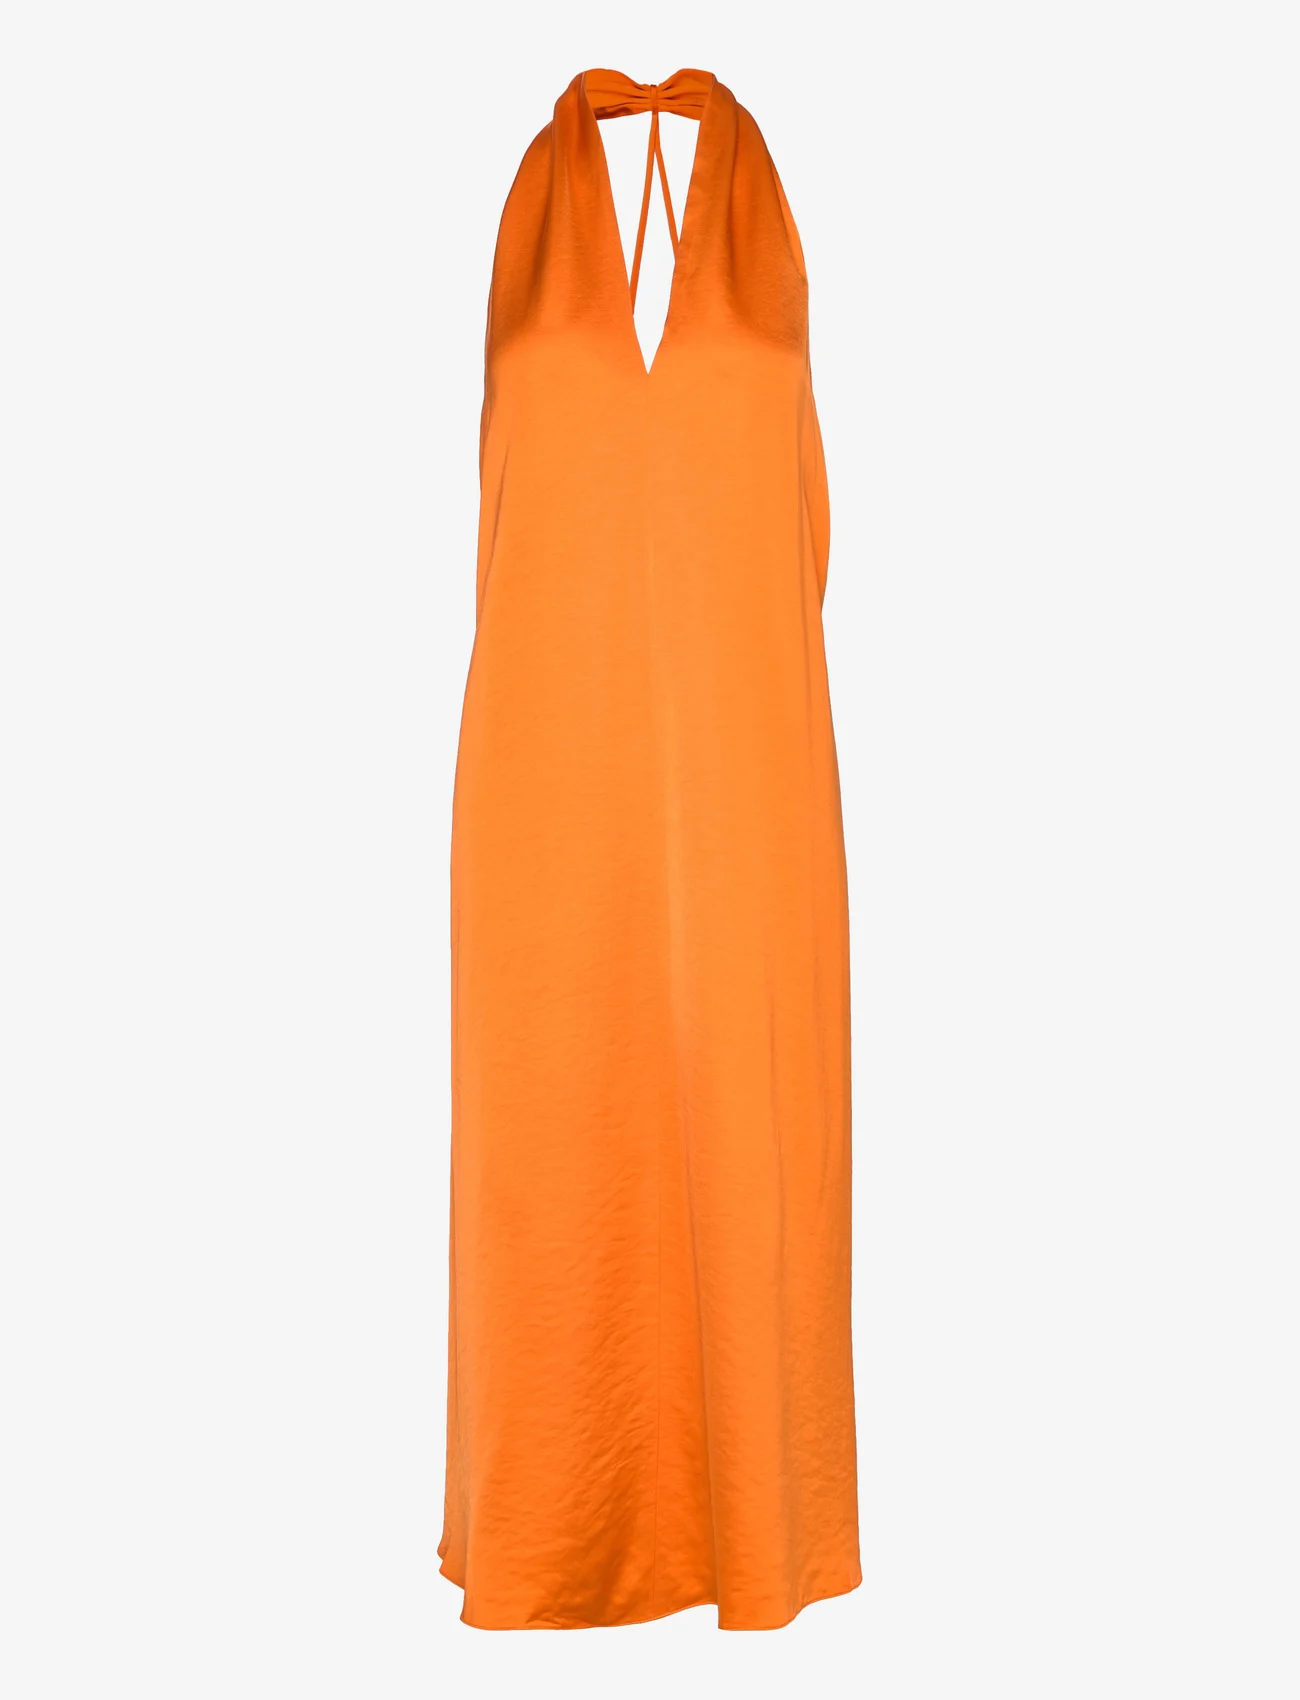 Samsøe Samsøe - Cille dress 14773 - midiklänningar - russet orange - 0